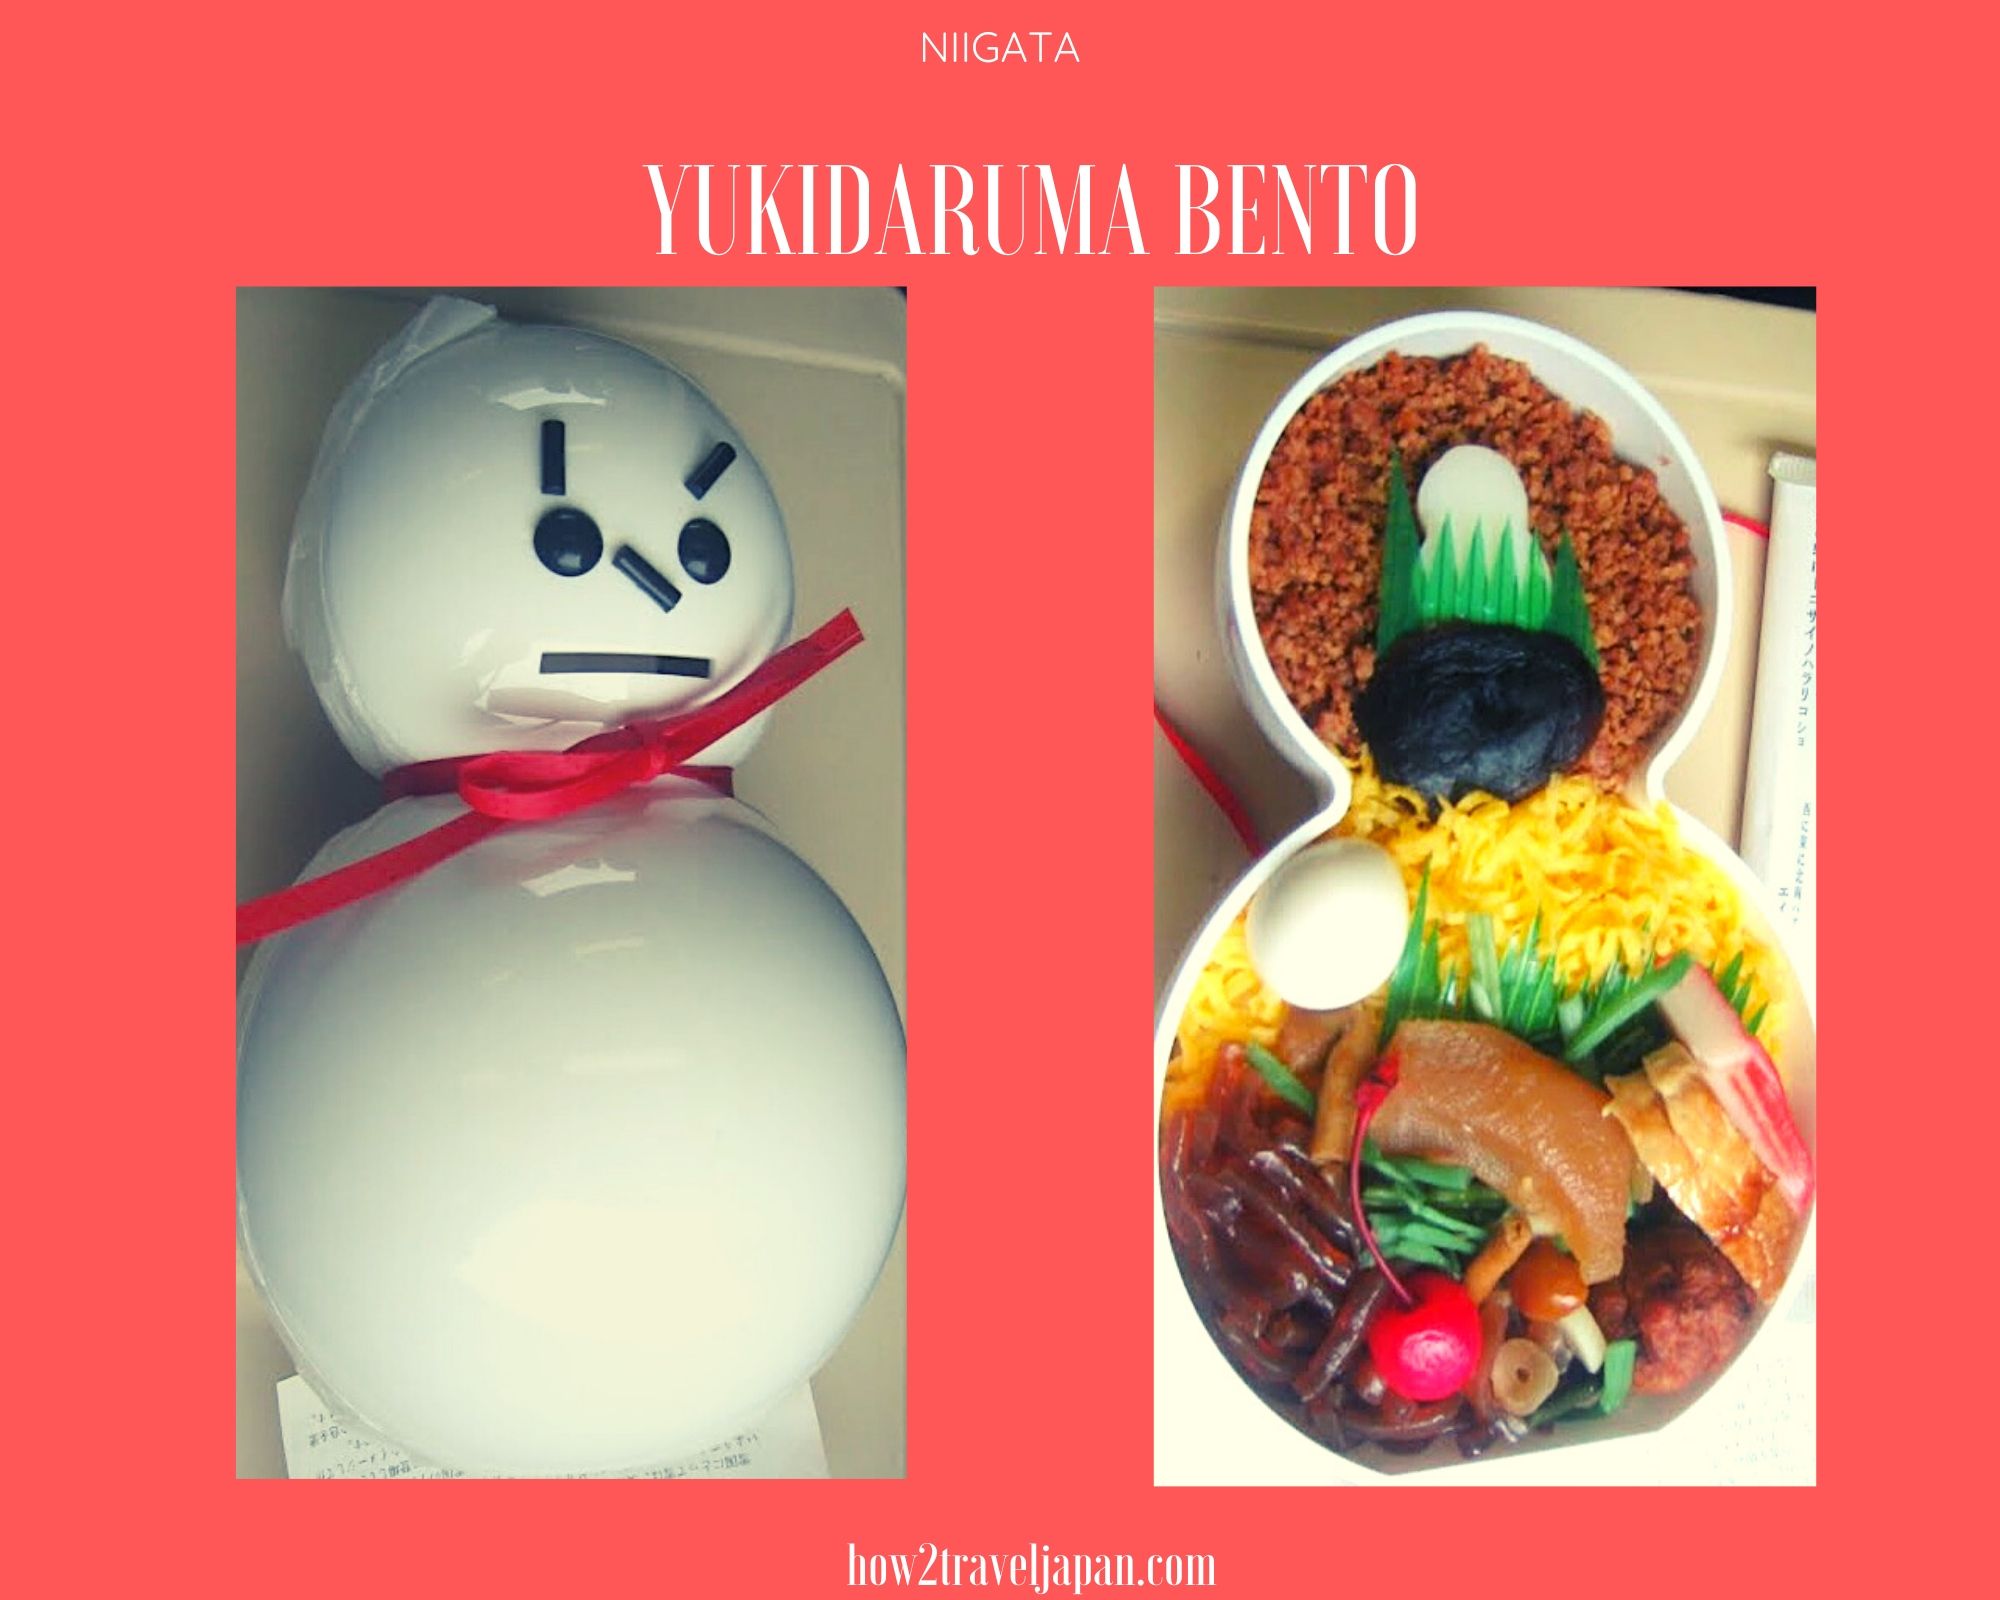 Read more about the article Yukidaruma bento from Niigata